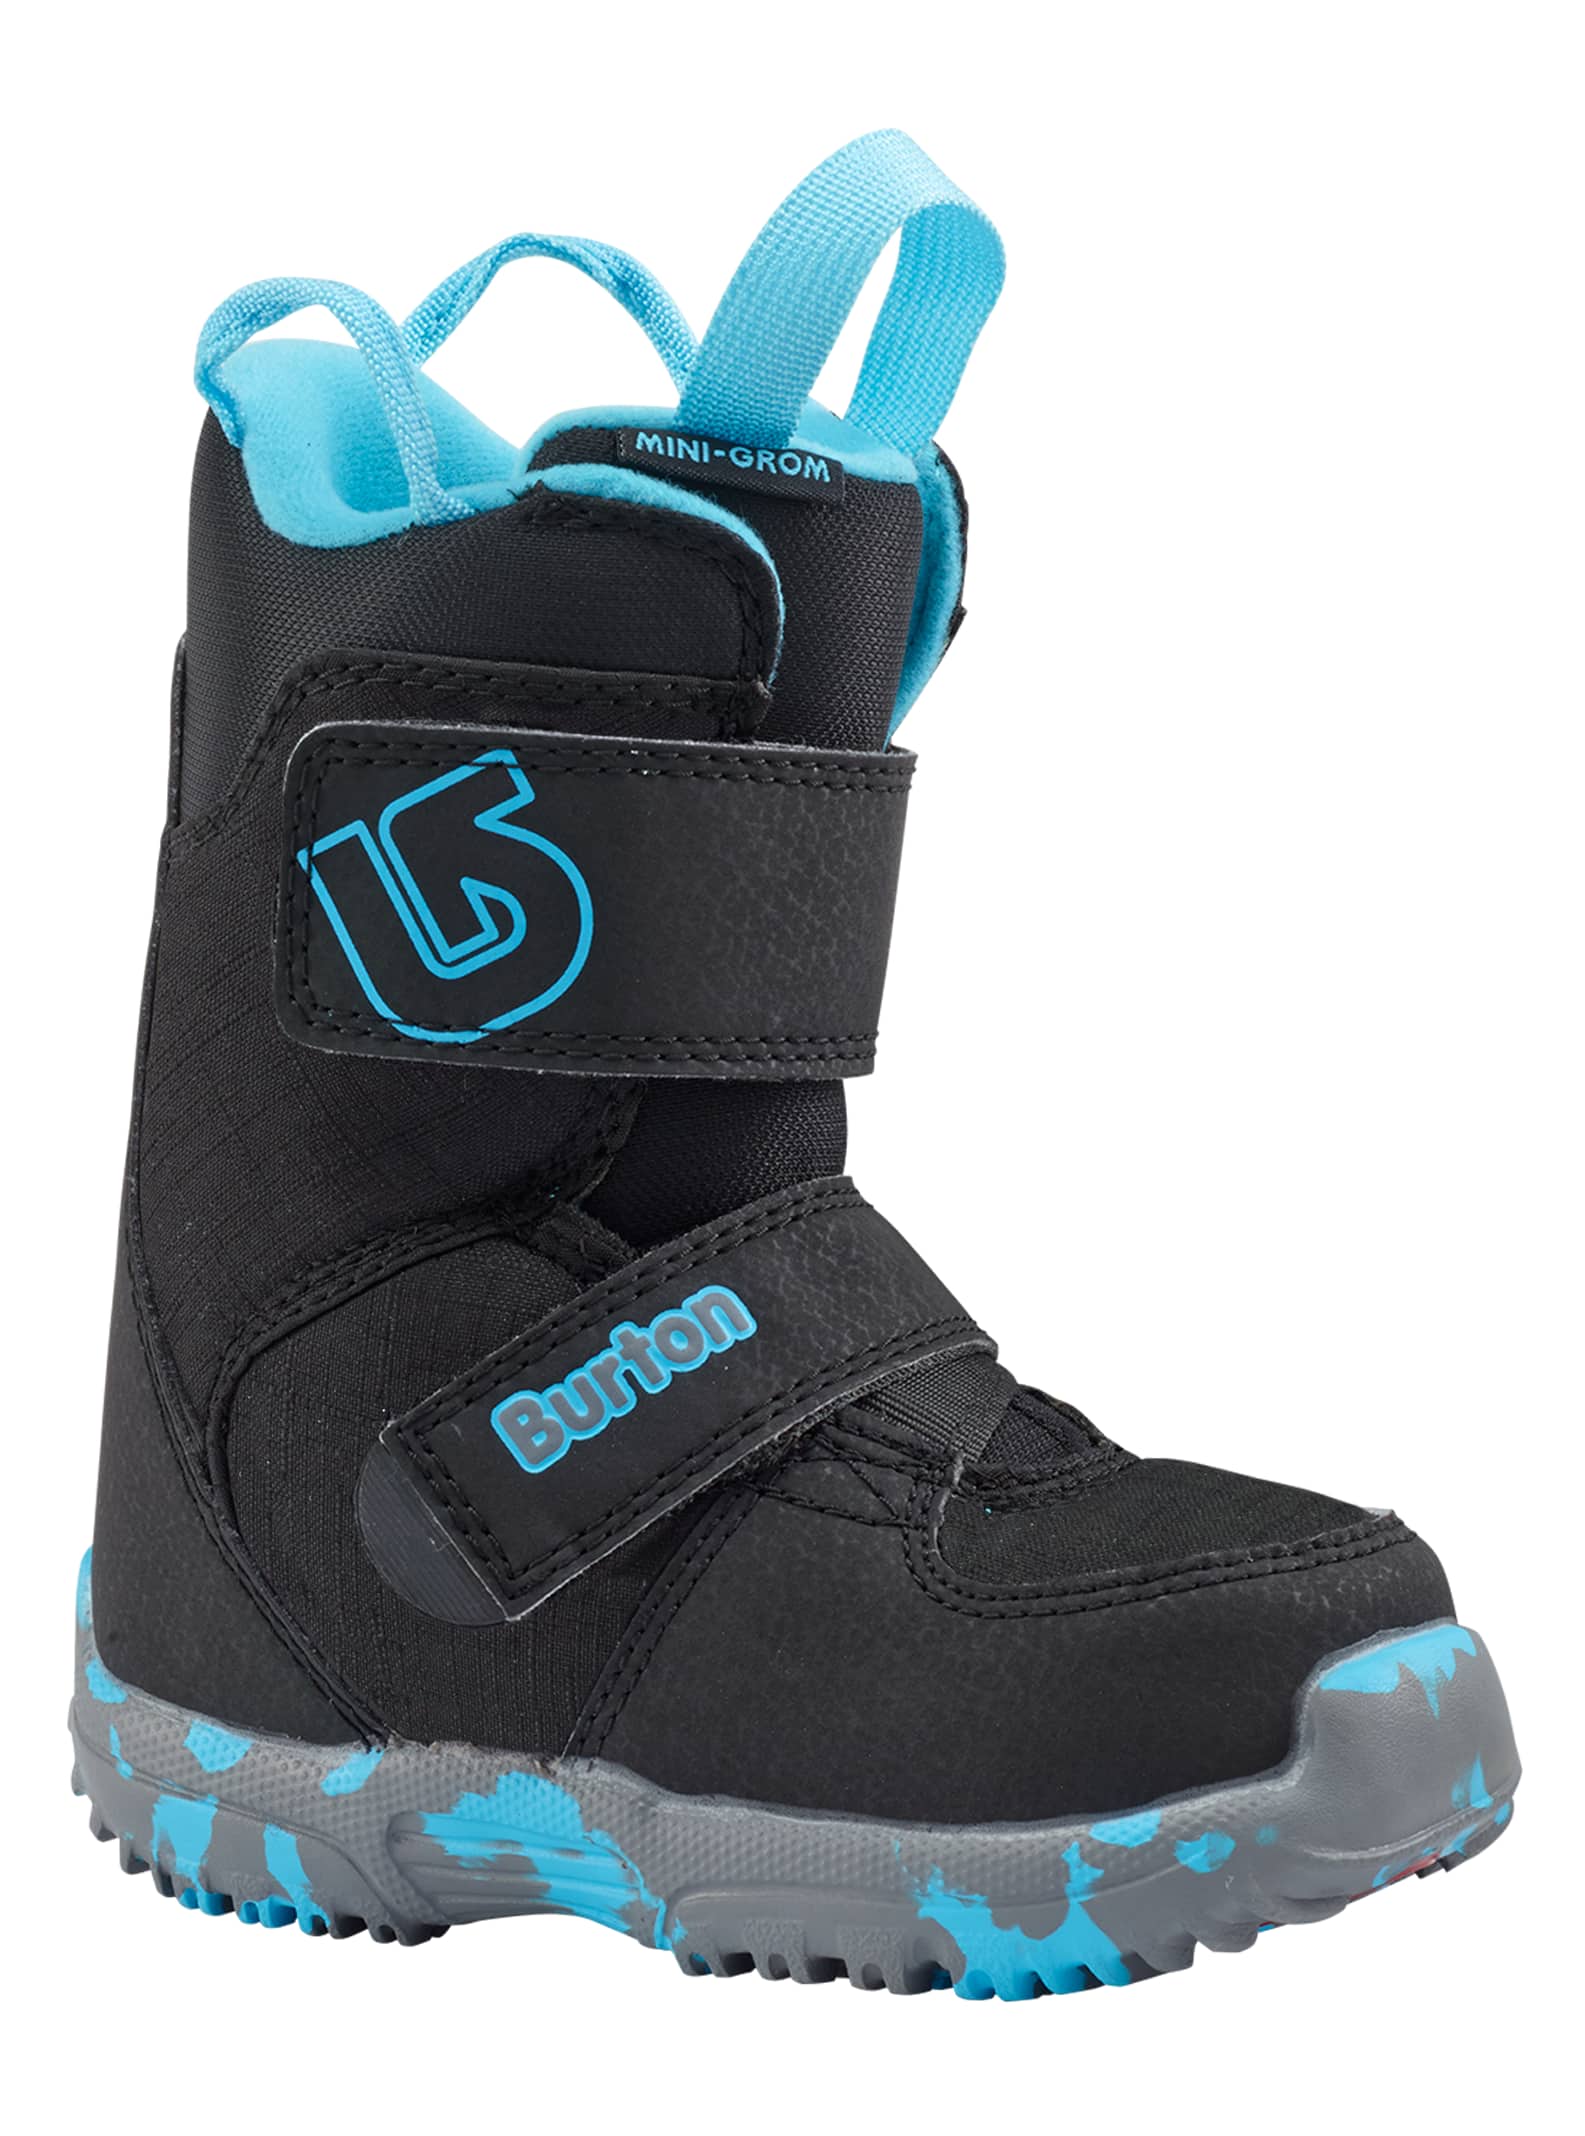 Toddler Burton Mini-Grom Snowboard Boot | Burton.com Winter 2019 US